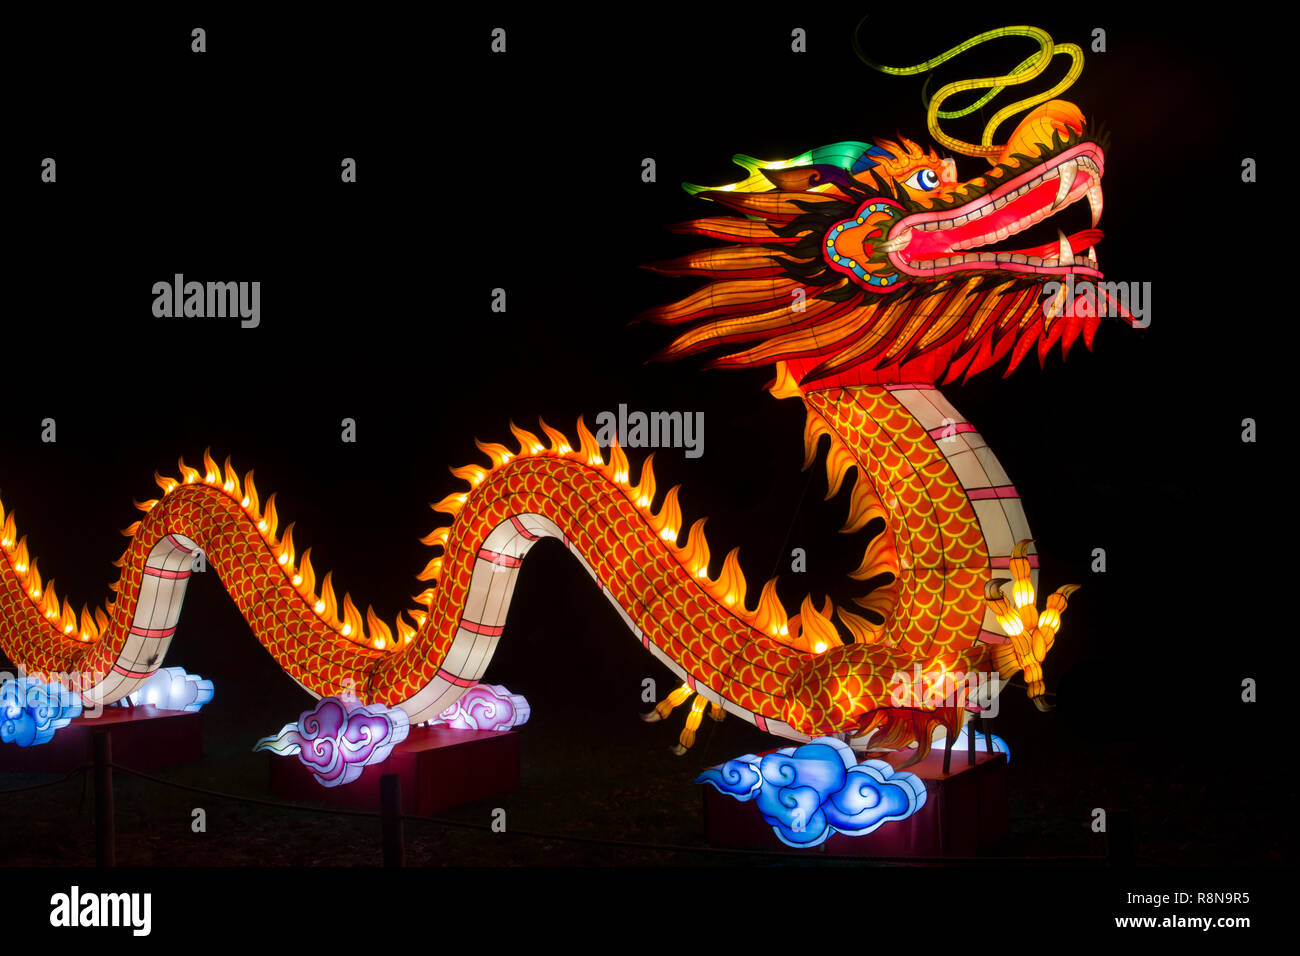 illuminated chinese dragon light object at a China Light Fe Stock Photo